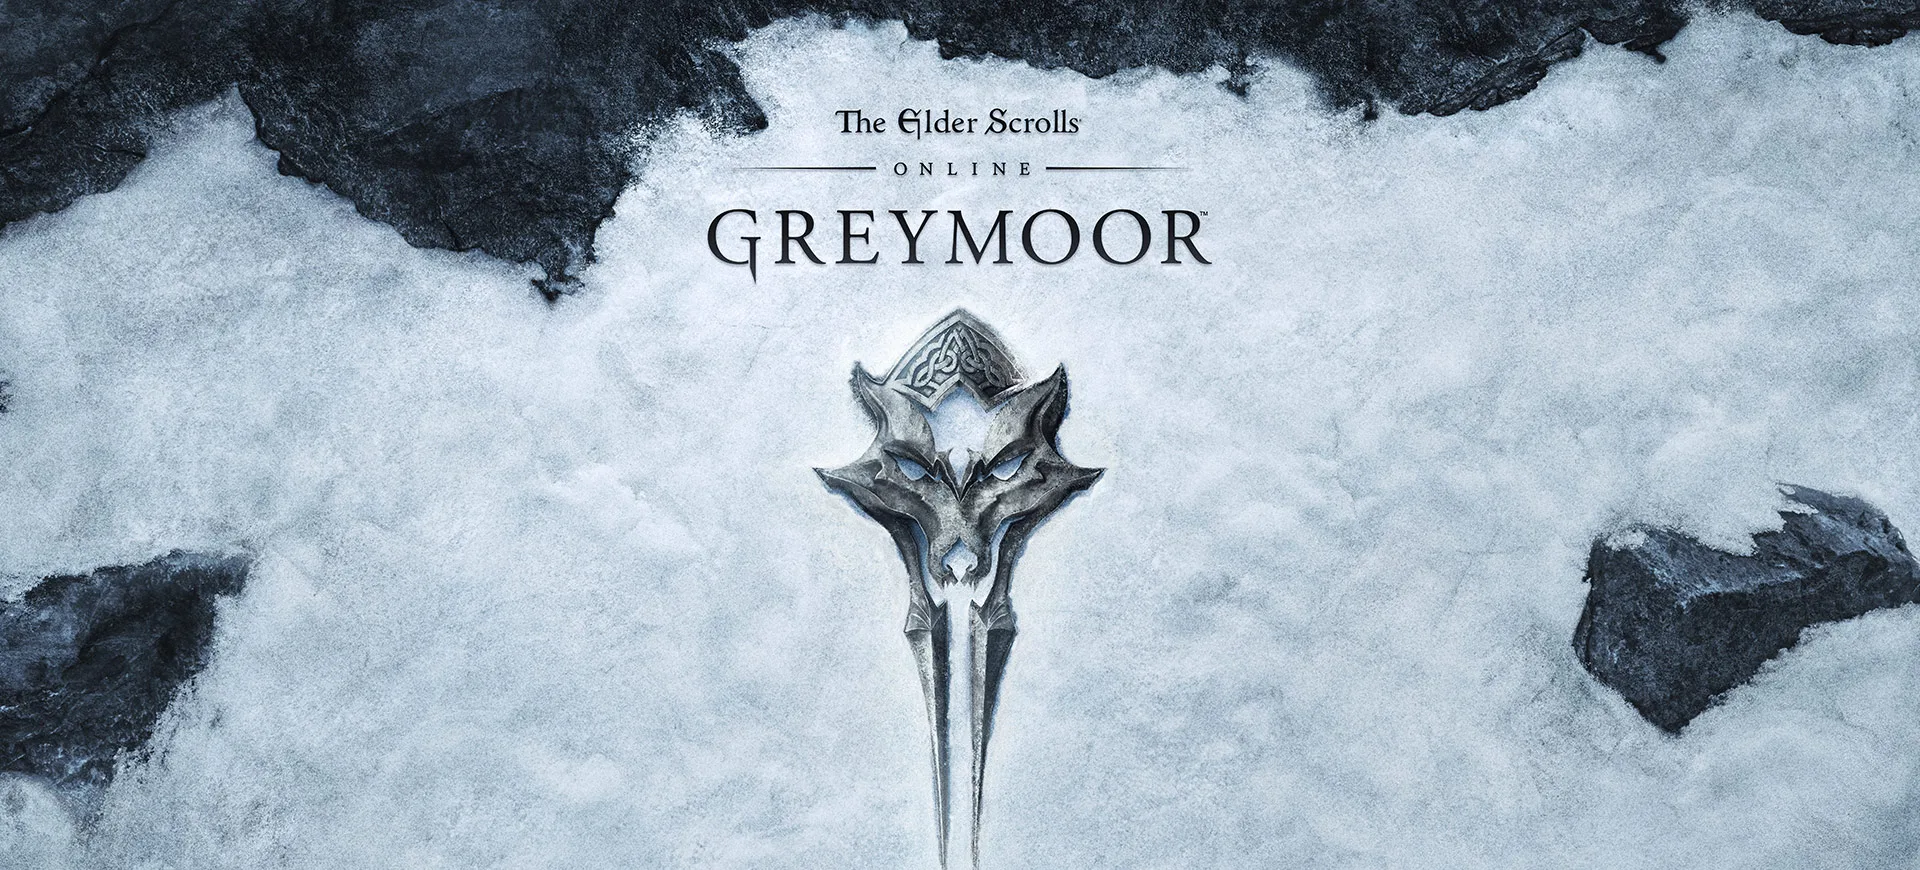 The Elder Scrolls Online Greymoor 版本介绍和预购奖励